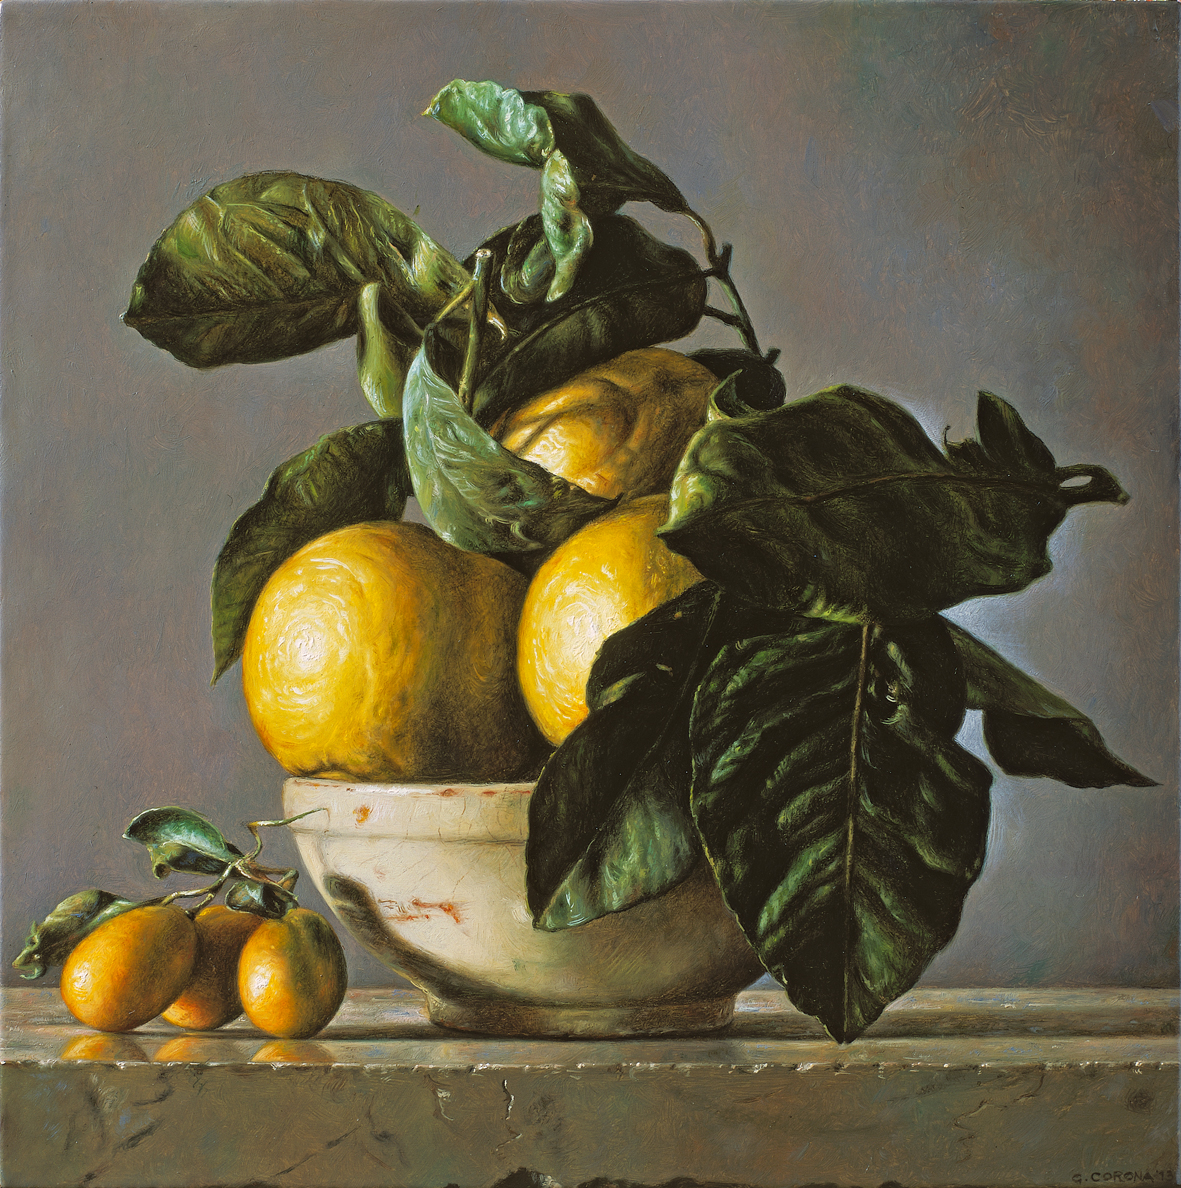 Lemon Yellow - 2013 olio su tavola cm 25x25 © Gianluca Corona